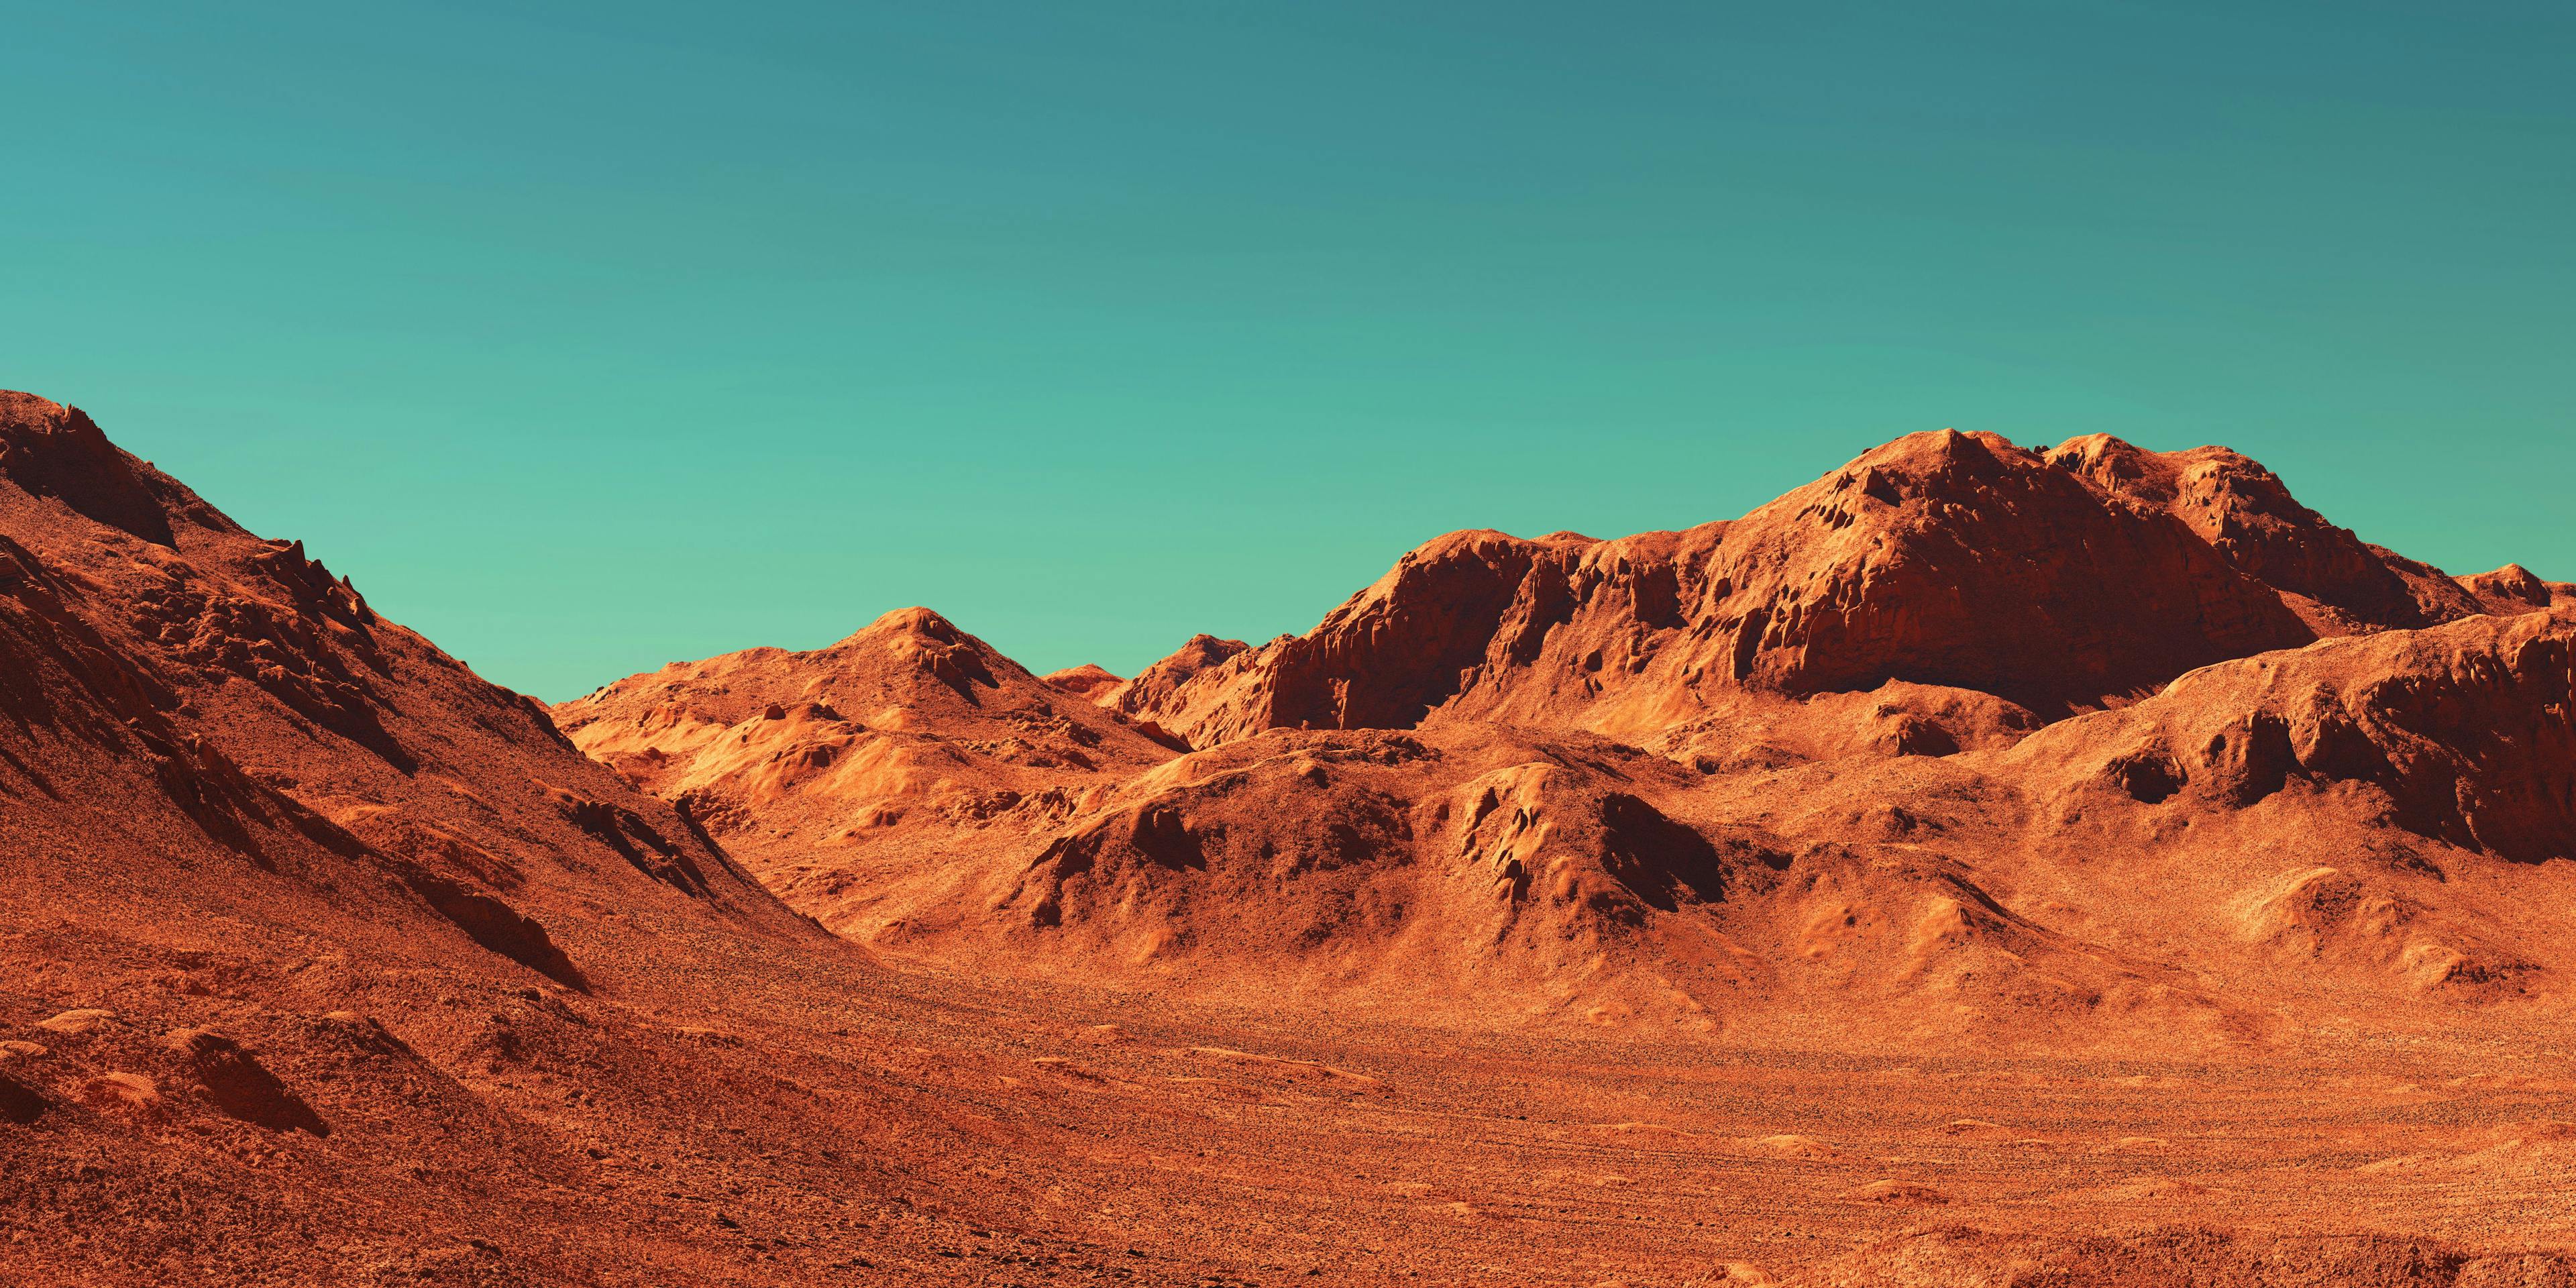 Mars landscape, 3d render of imaginary mars planet terrain, science fiction illustration. | Image Credit: © Cobalt - stock.adobe.com